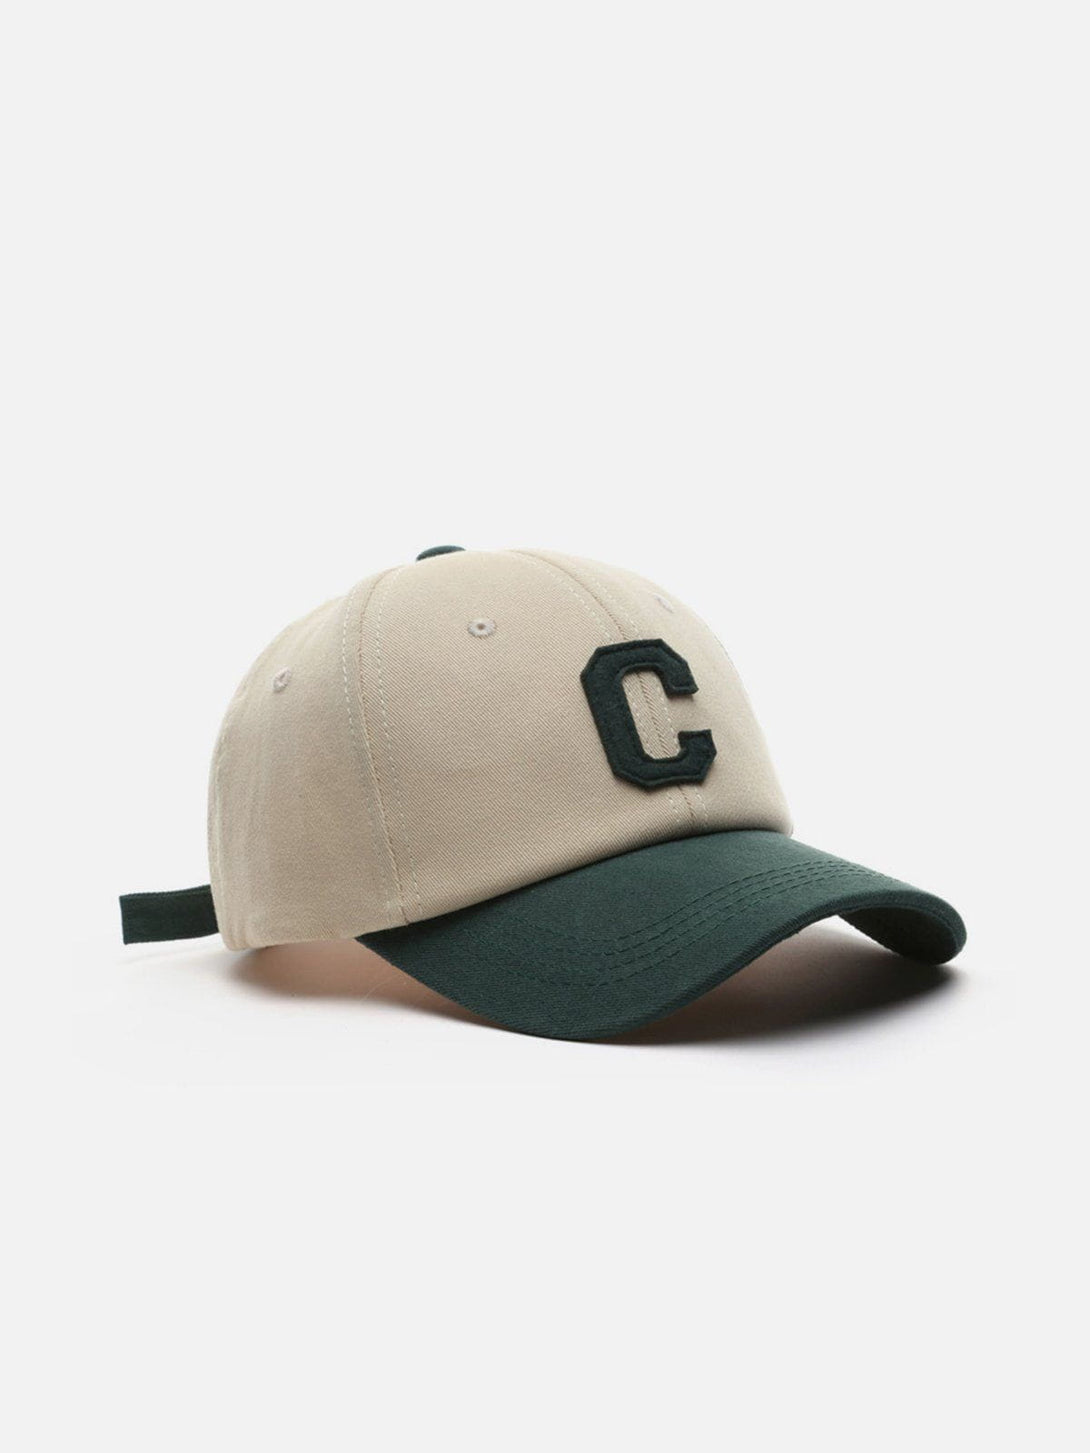 Majesda® - Letter "C" Baseball Cap- Outfit Ideas - Streetwear Fashion - majesda.com